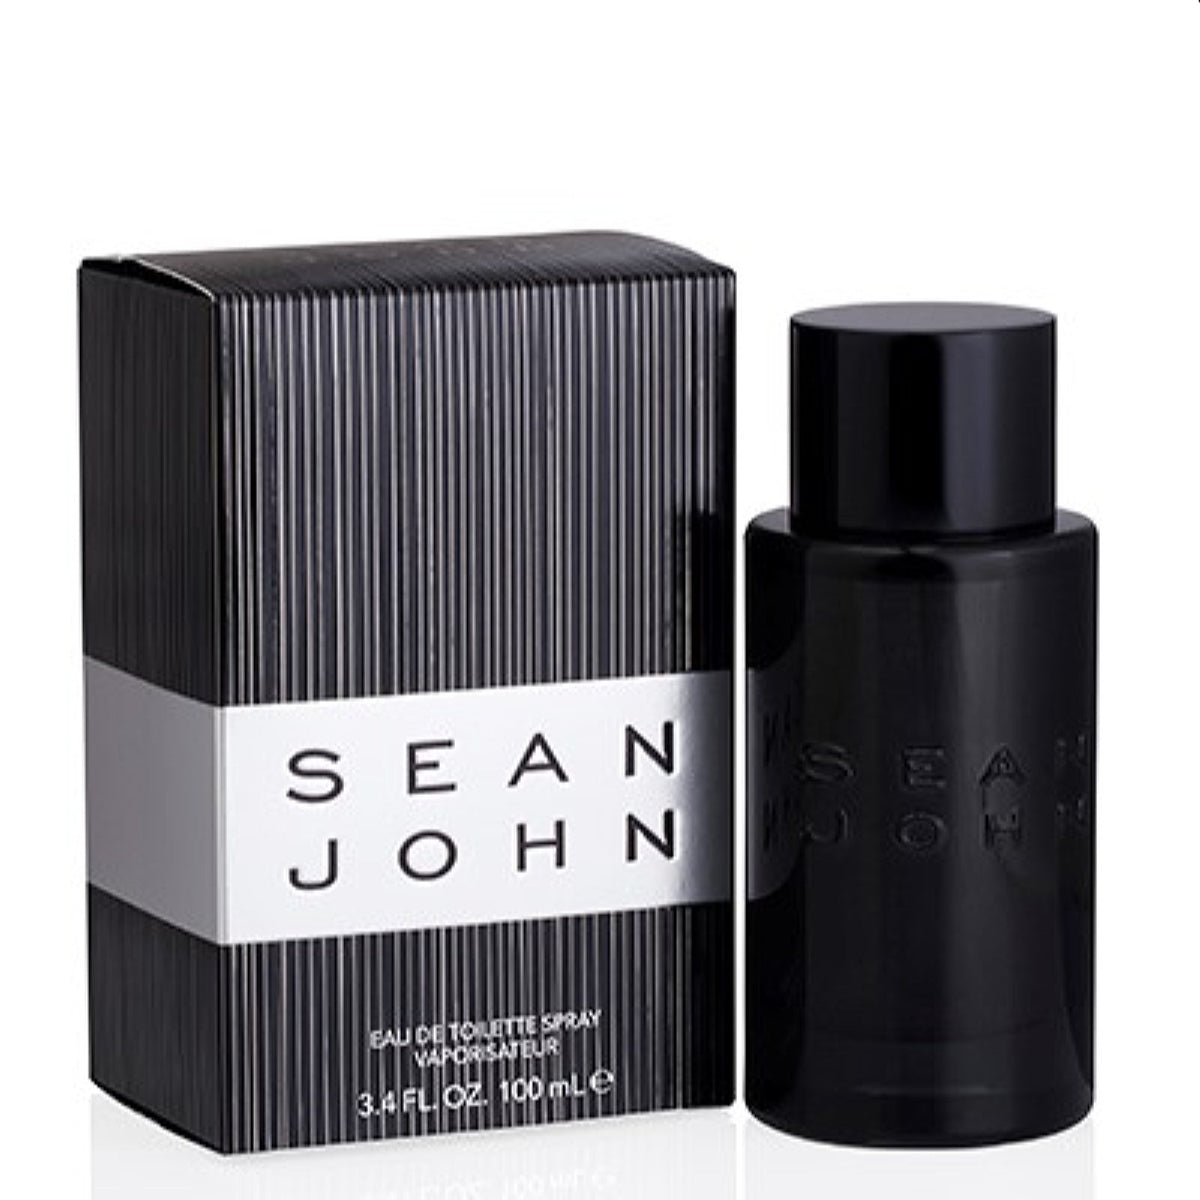 Sean John Sean John Edt Spray 3.4 Oz (100 Ml) For Men 167792277